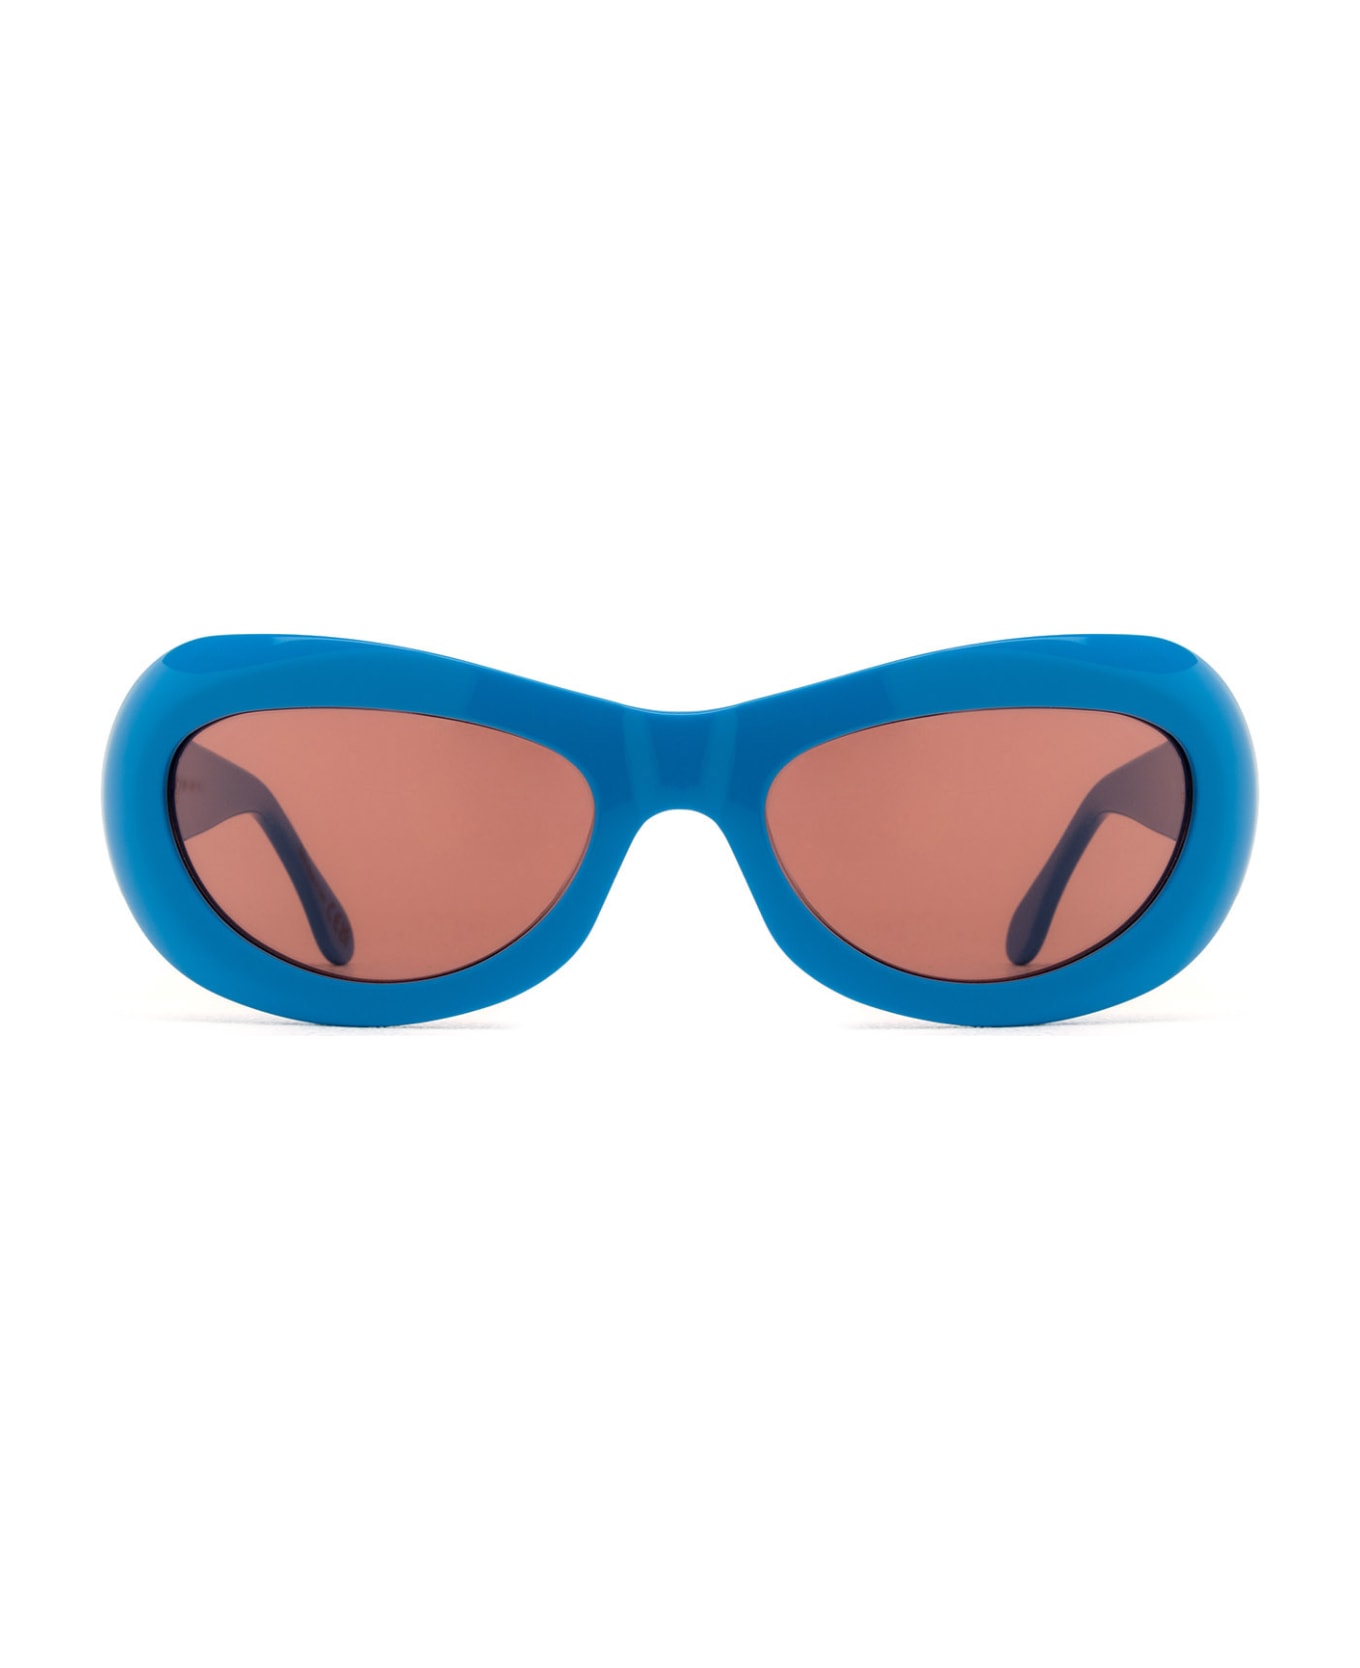 Marni Eyewear Field Of Rushes Blue Sunglasses - Blue